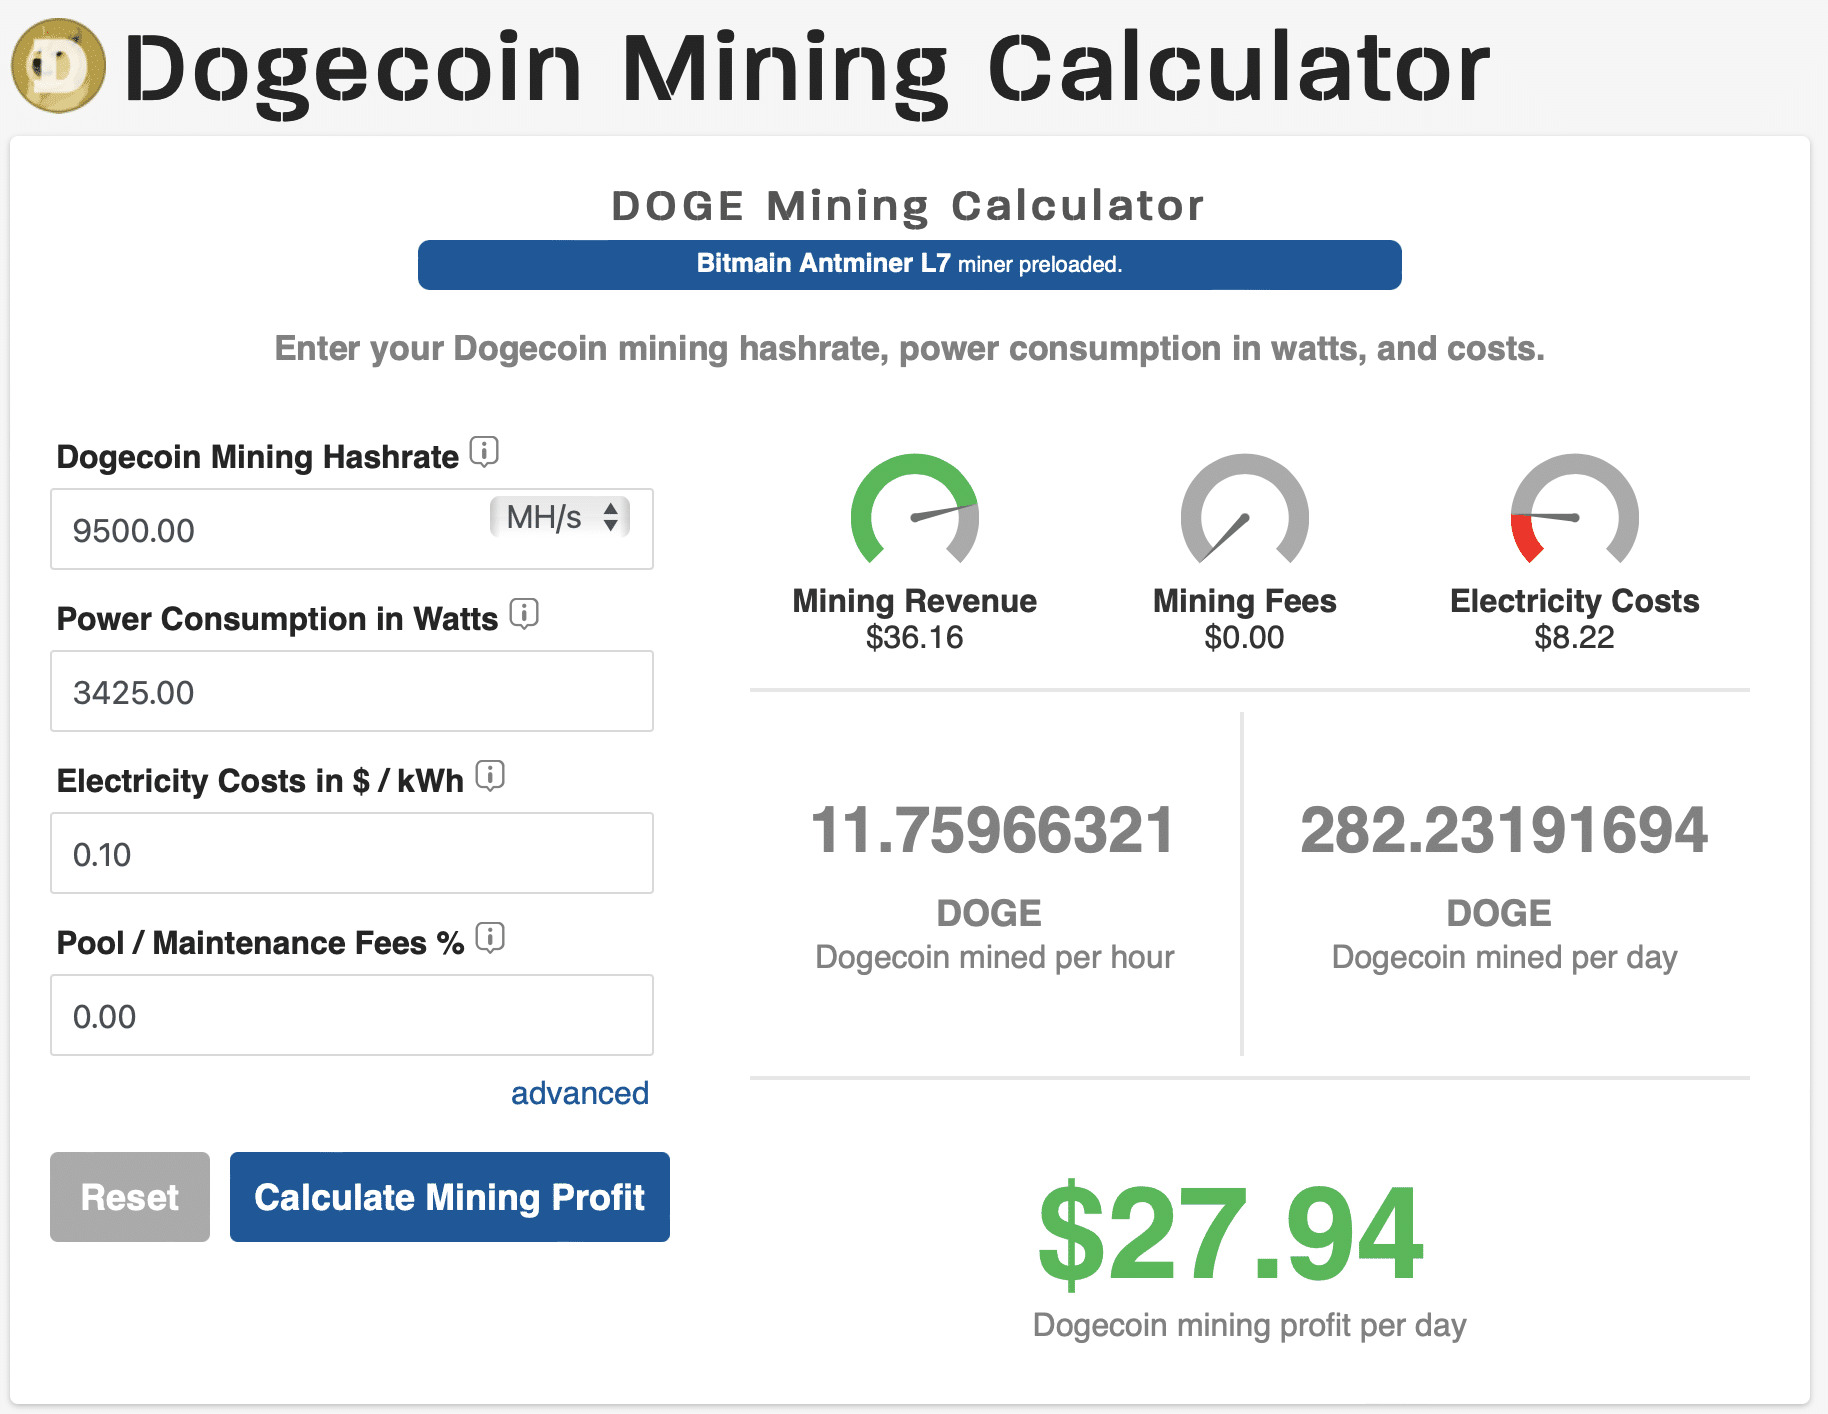 DOGE Mining Calculator